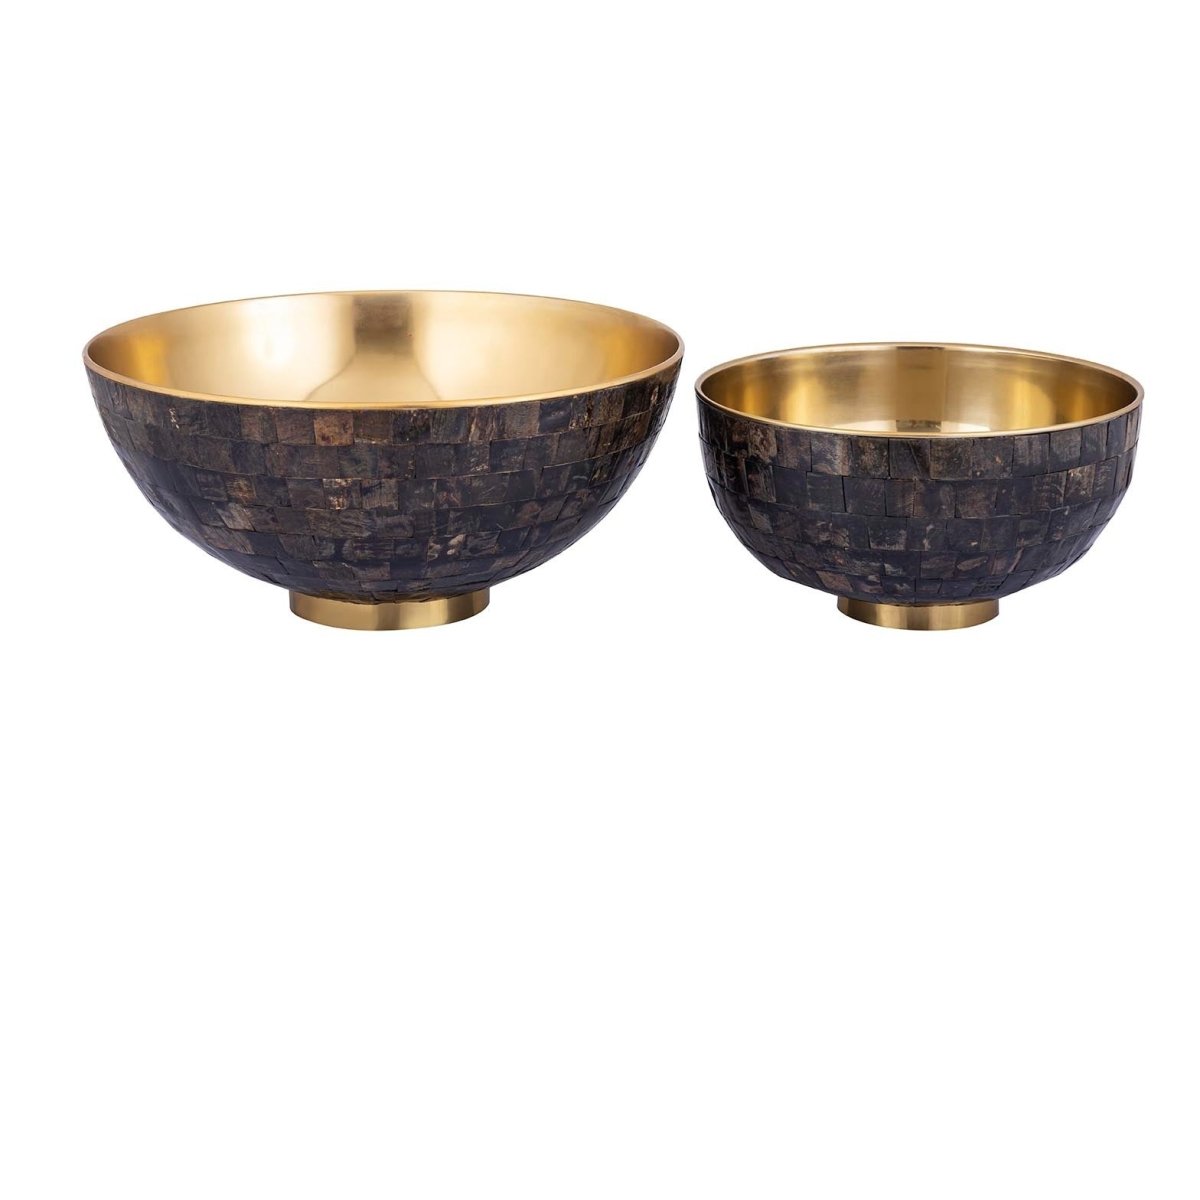 Schale - Loder Gold Horn shiny handbesetzt mit Büffelhorn (Set aus 2) - Esszett Luxury